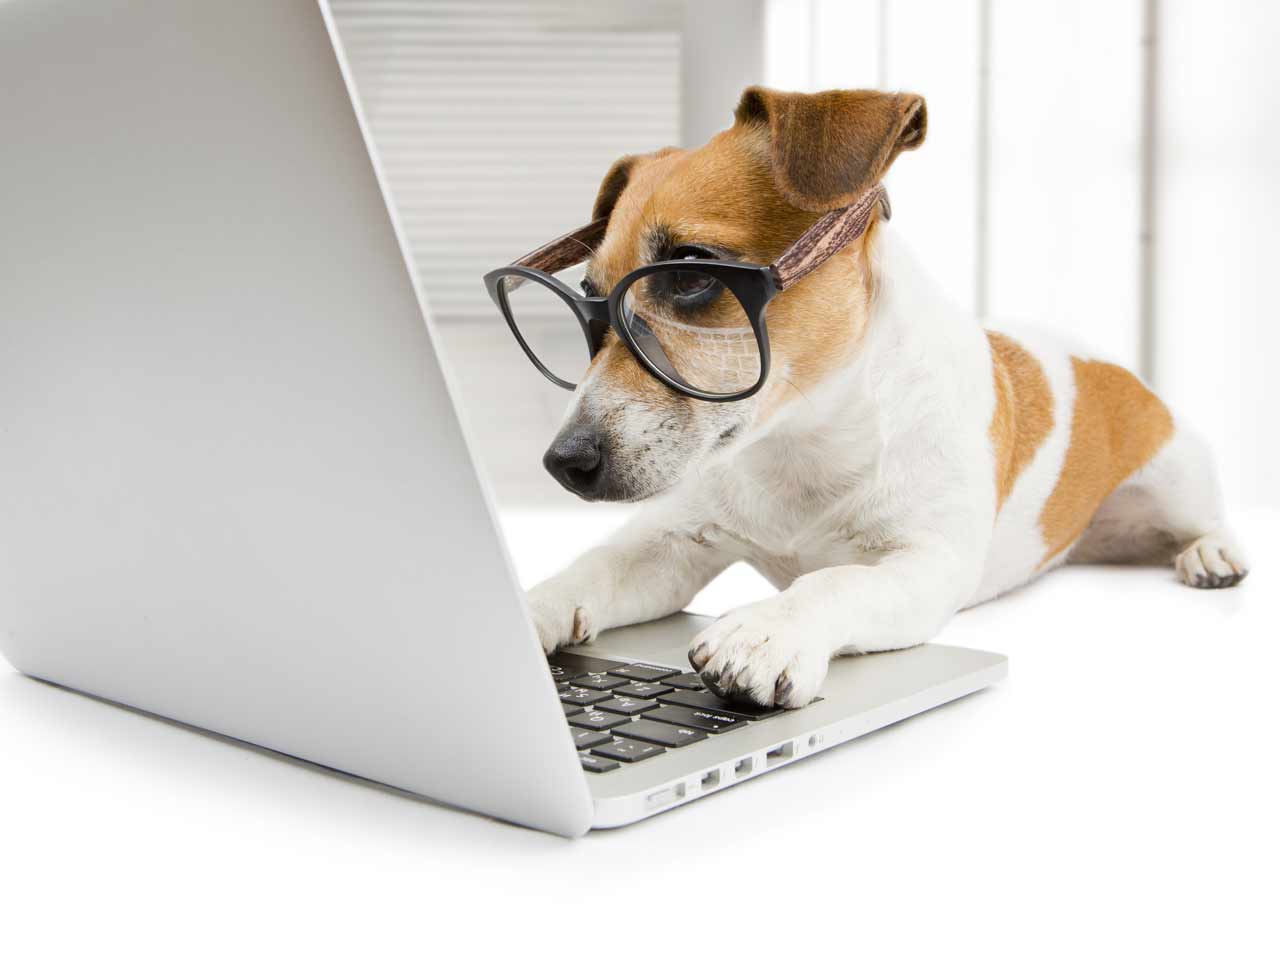 Terrier looking at computer screen